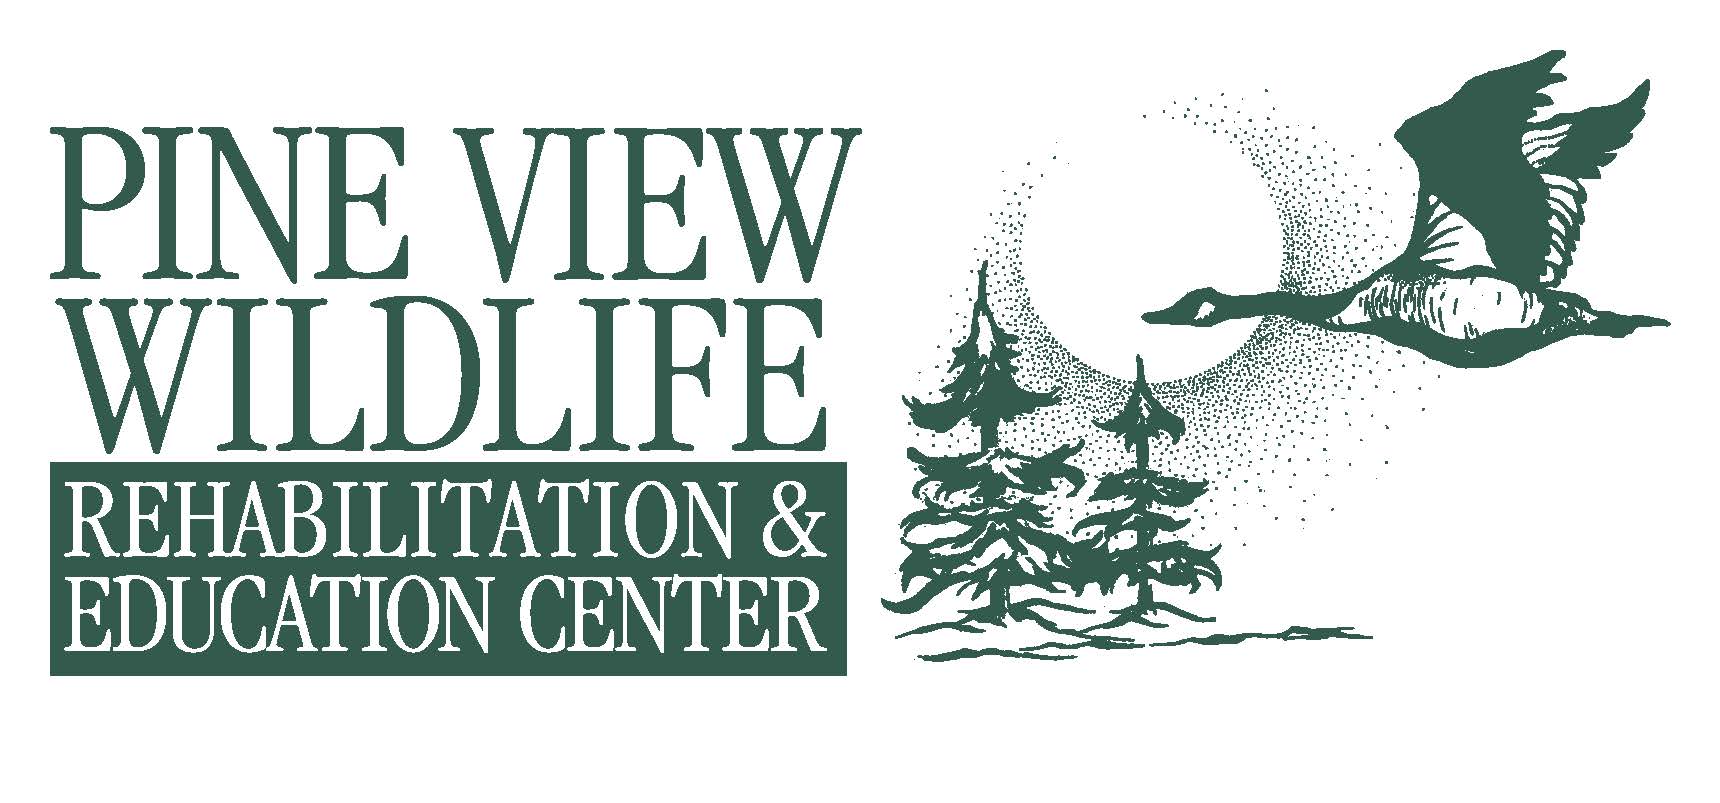 Pine View Wildlife Rehabilitation and Education Center logo